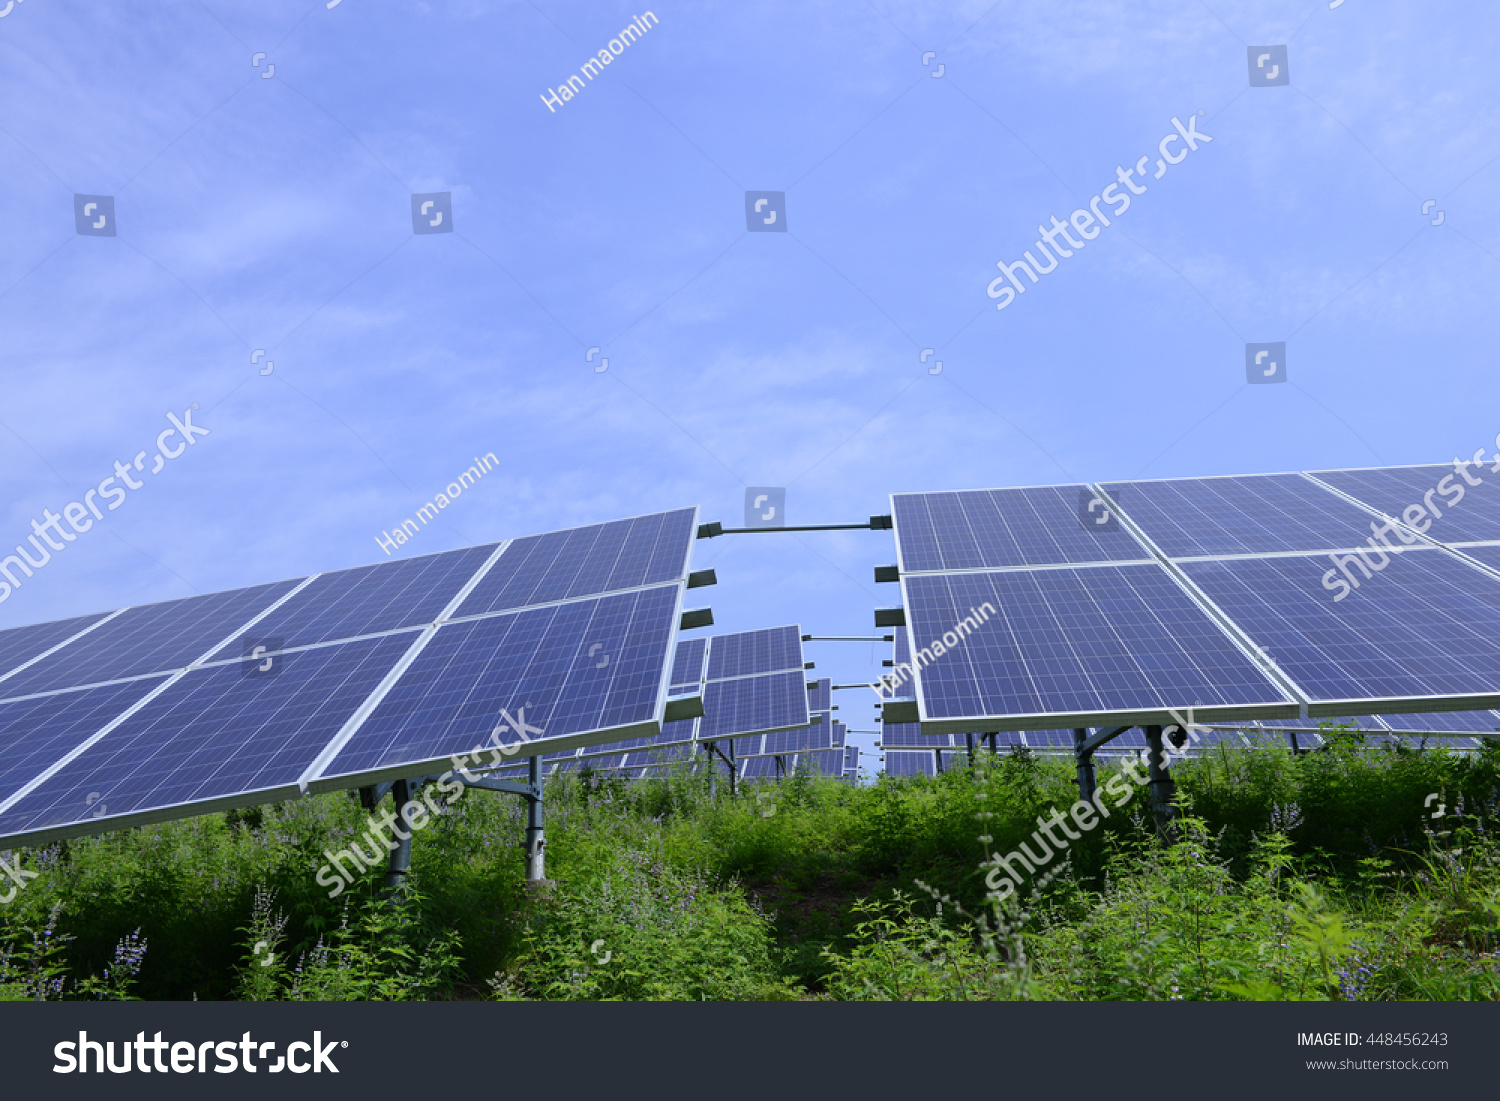 Solar Power Equipment Stock Photo 448456243 : Shutterstock